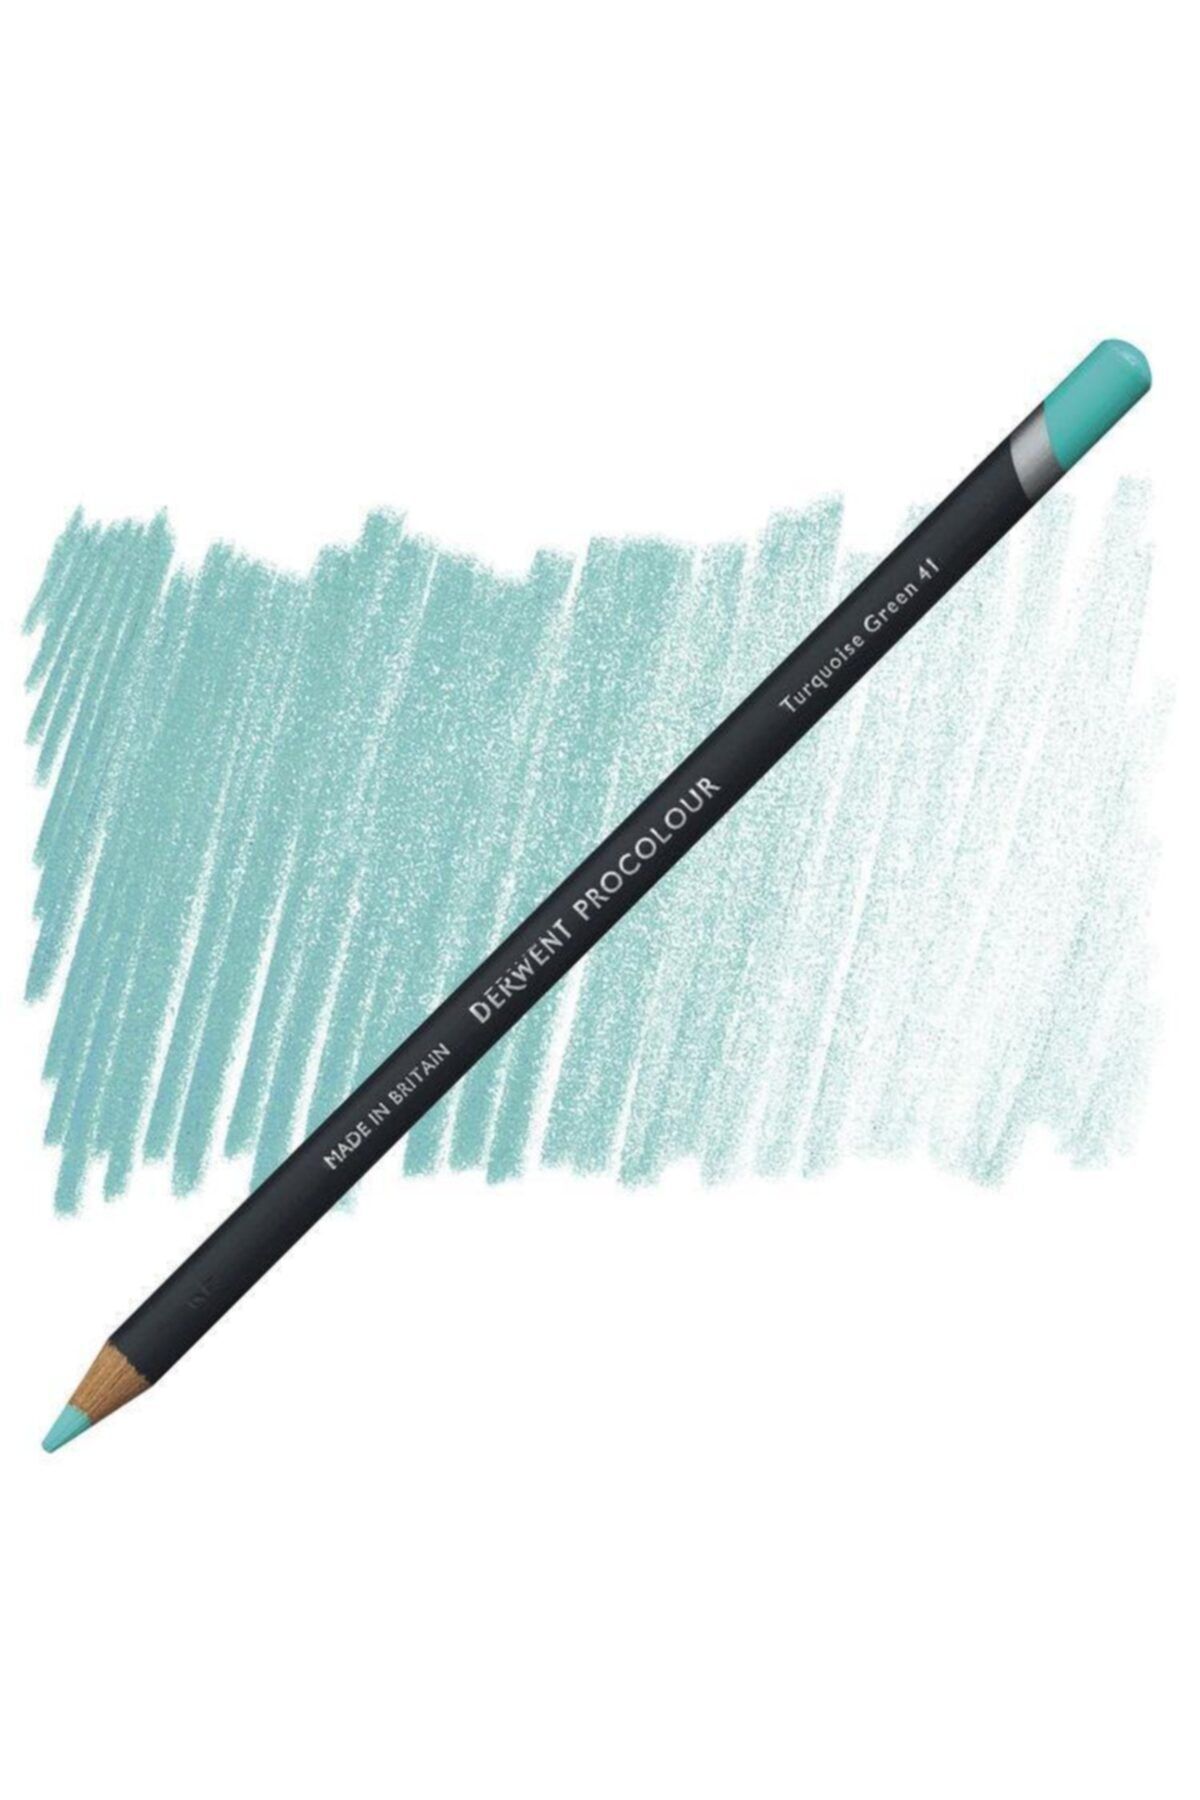 Derwent Procolour Pencil (kuru Boya Kalemi) Turquoise Green (41)